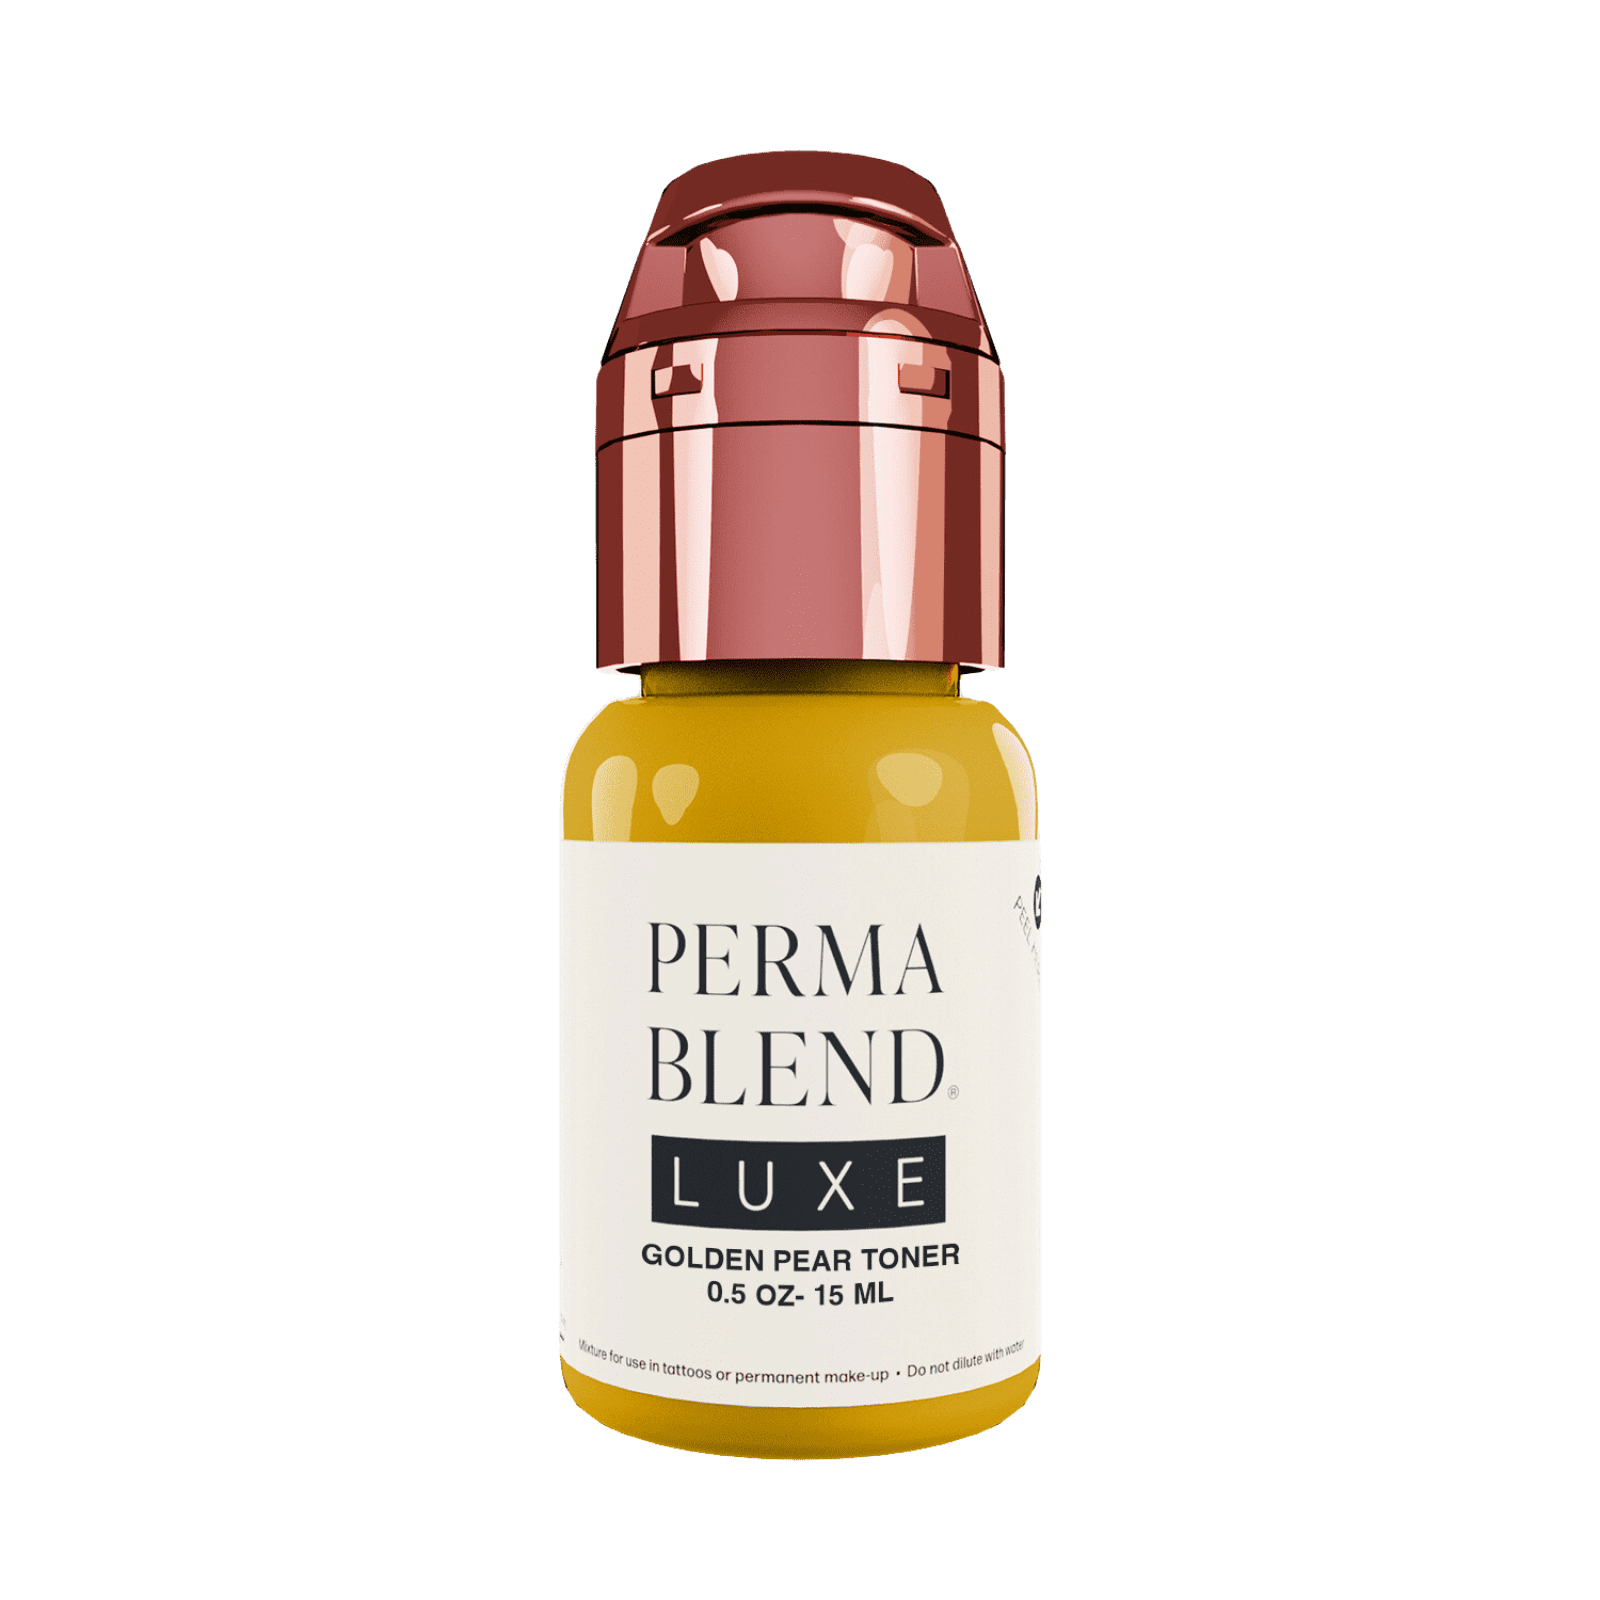 Perma Blend Luxe Golden Pear Toner Pigmento PMU 15ml